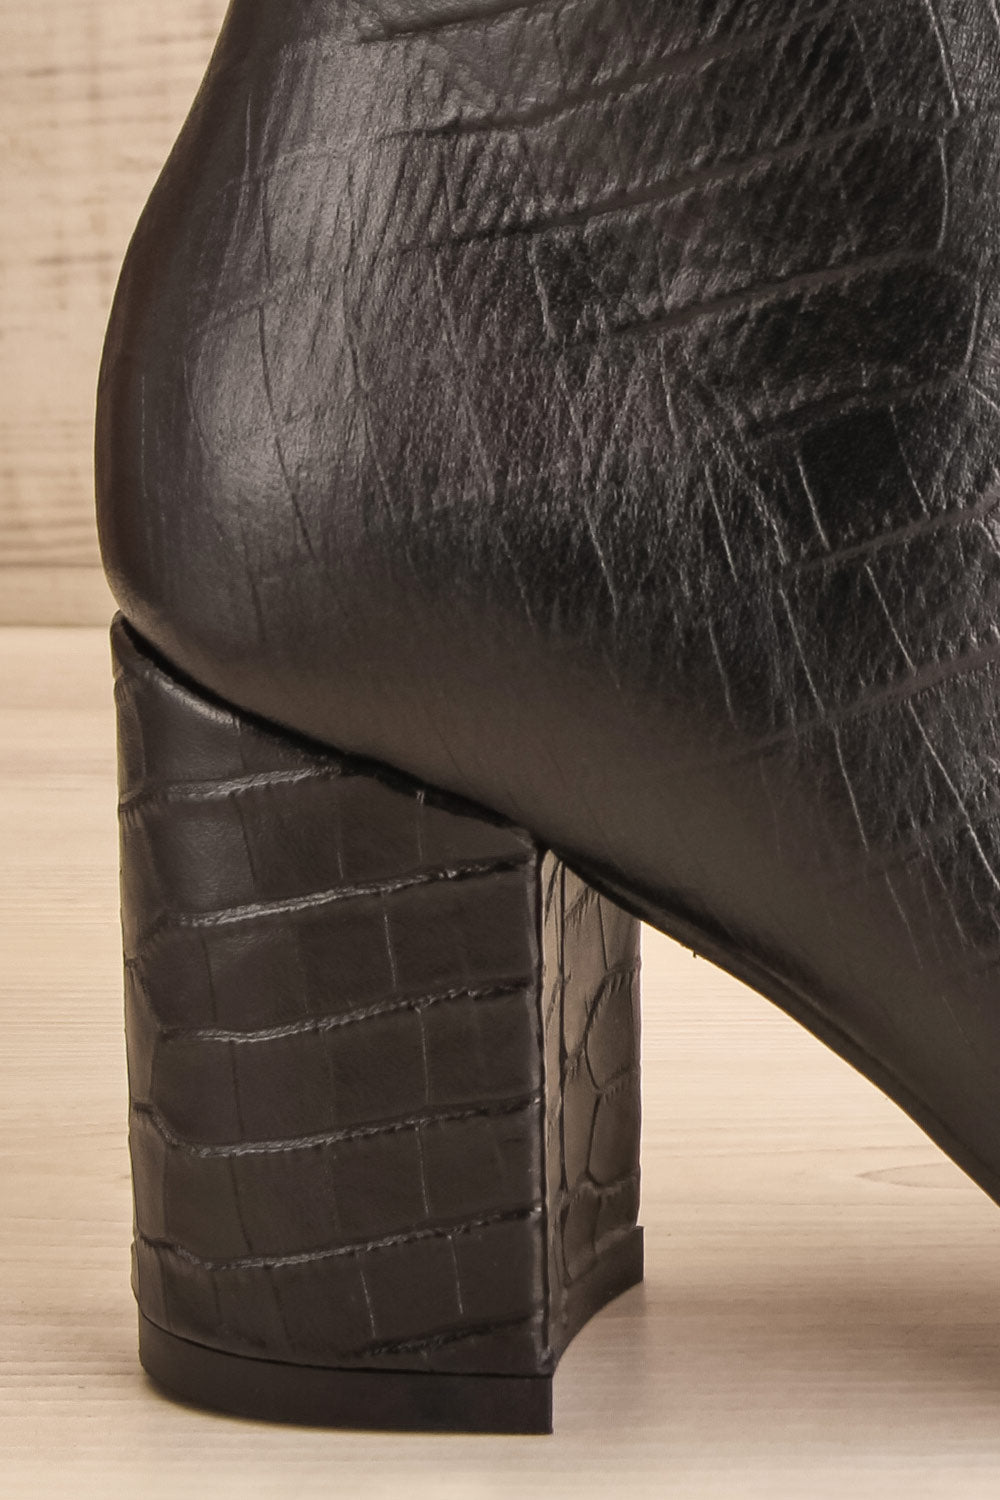 Tobi Black Crocodile Skin Heeled Ankle Boots side heel close-up | La Petite Garçonne